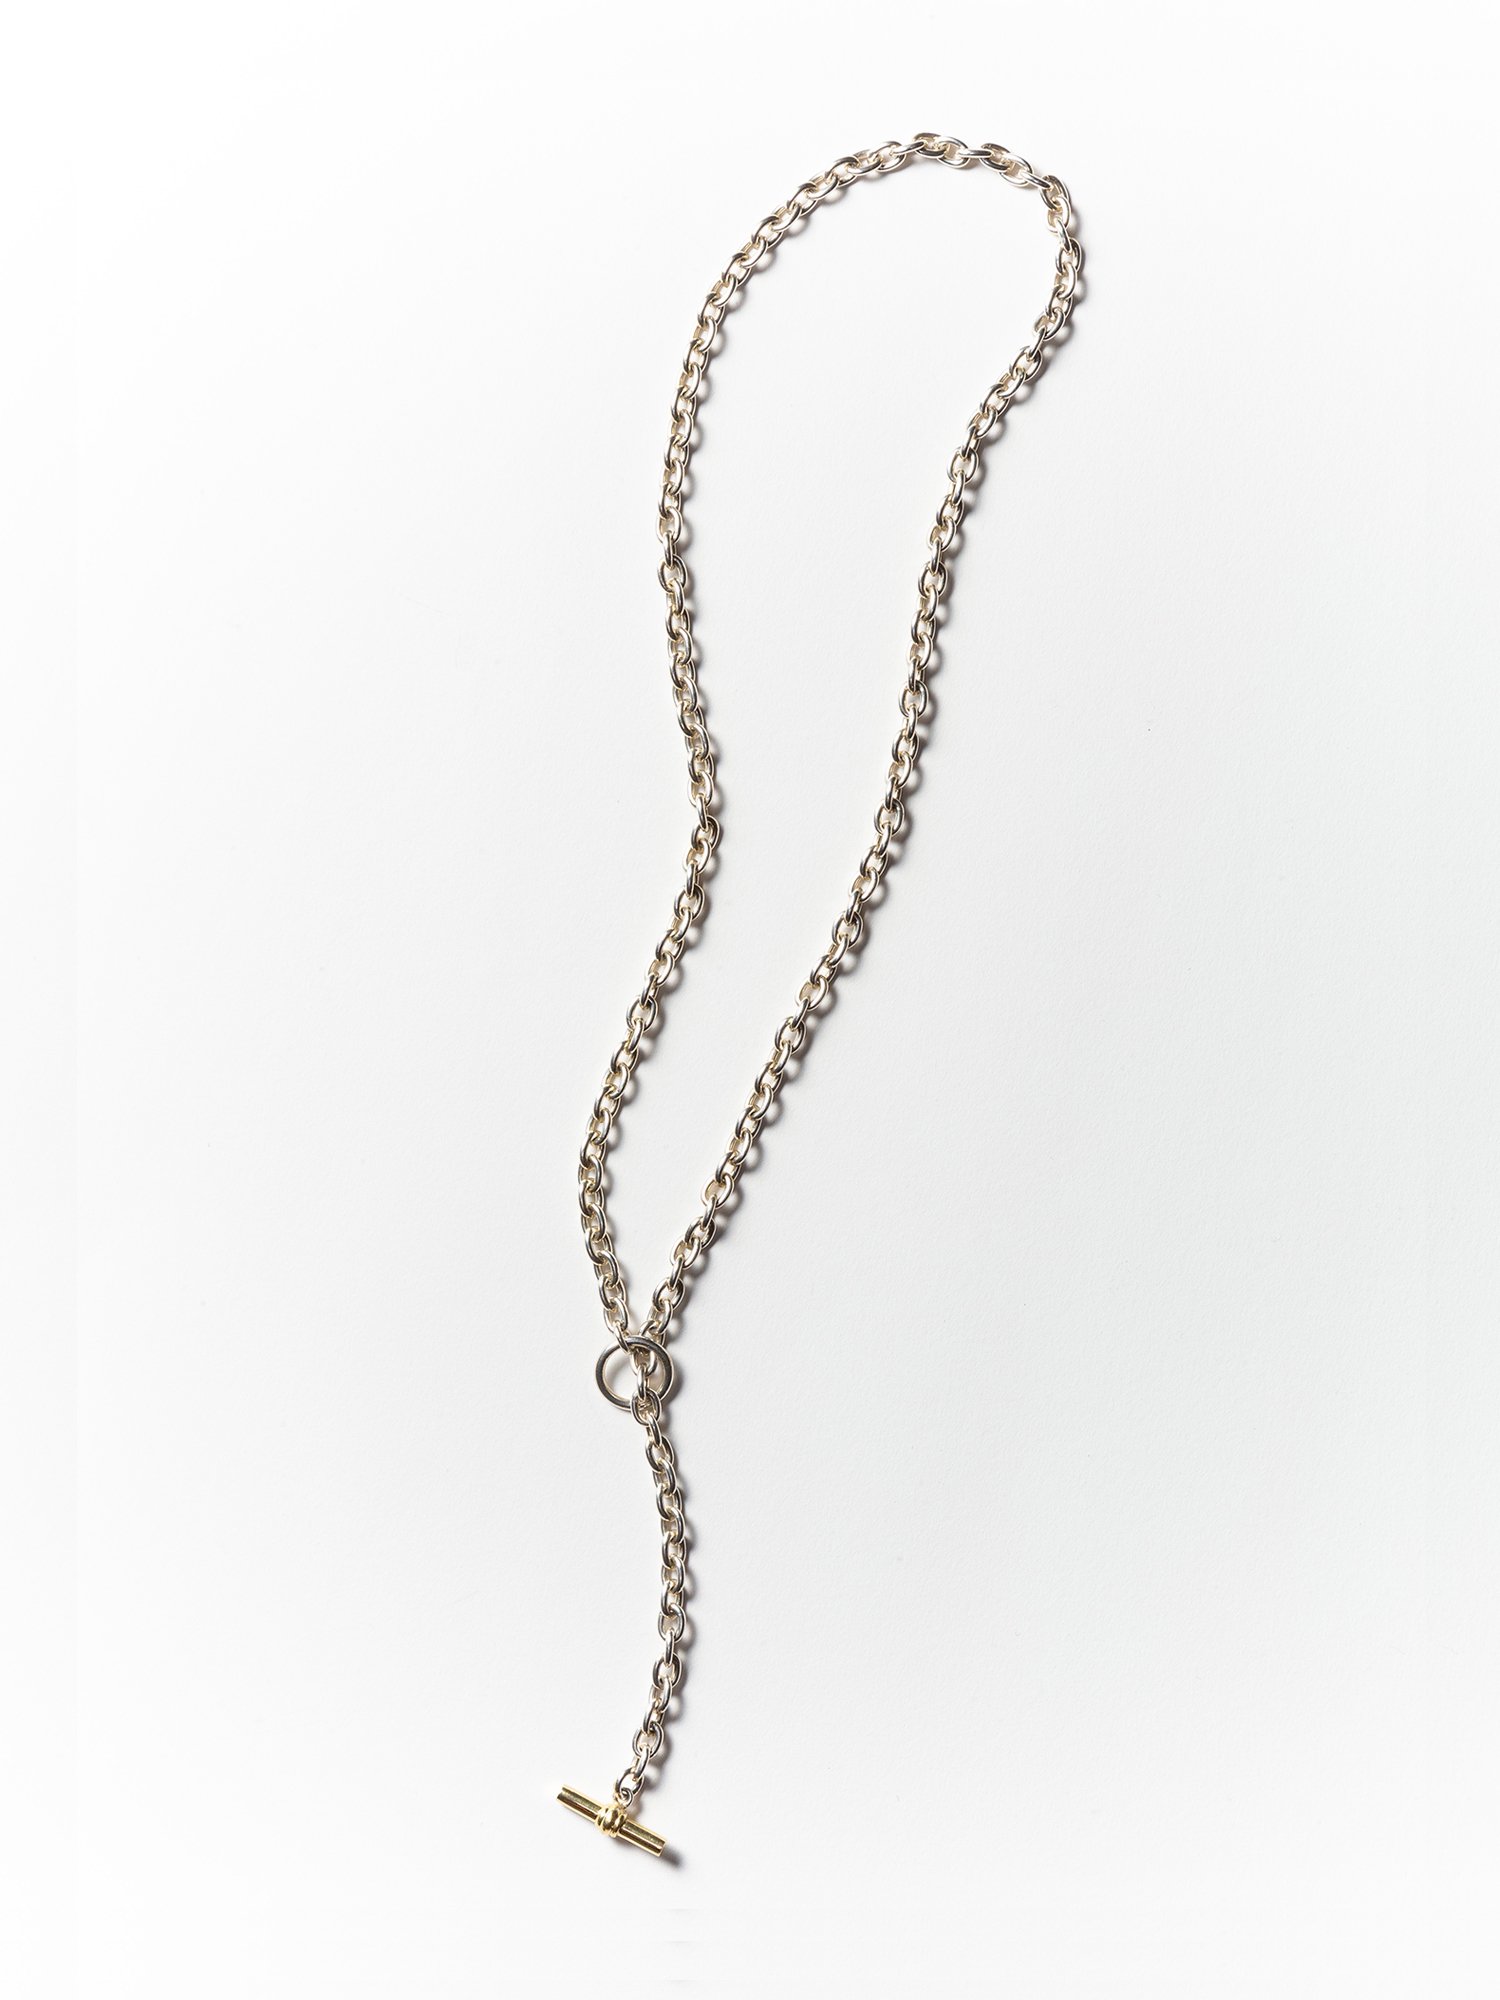 ARTEMIS / Artemis chain necklace - GIGI Jewelry